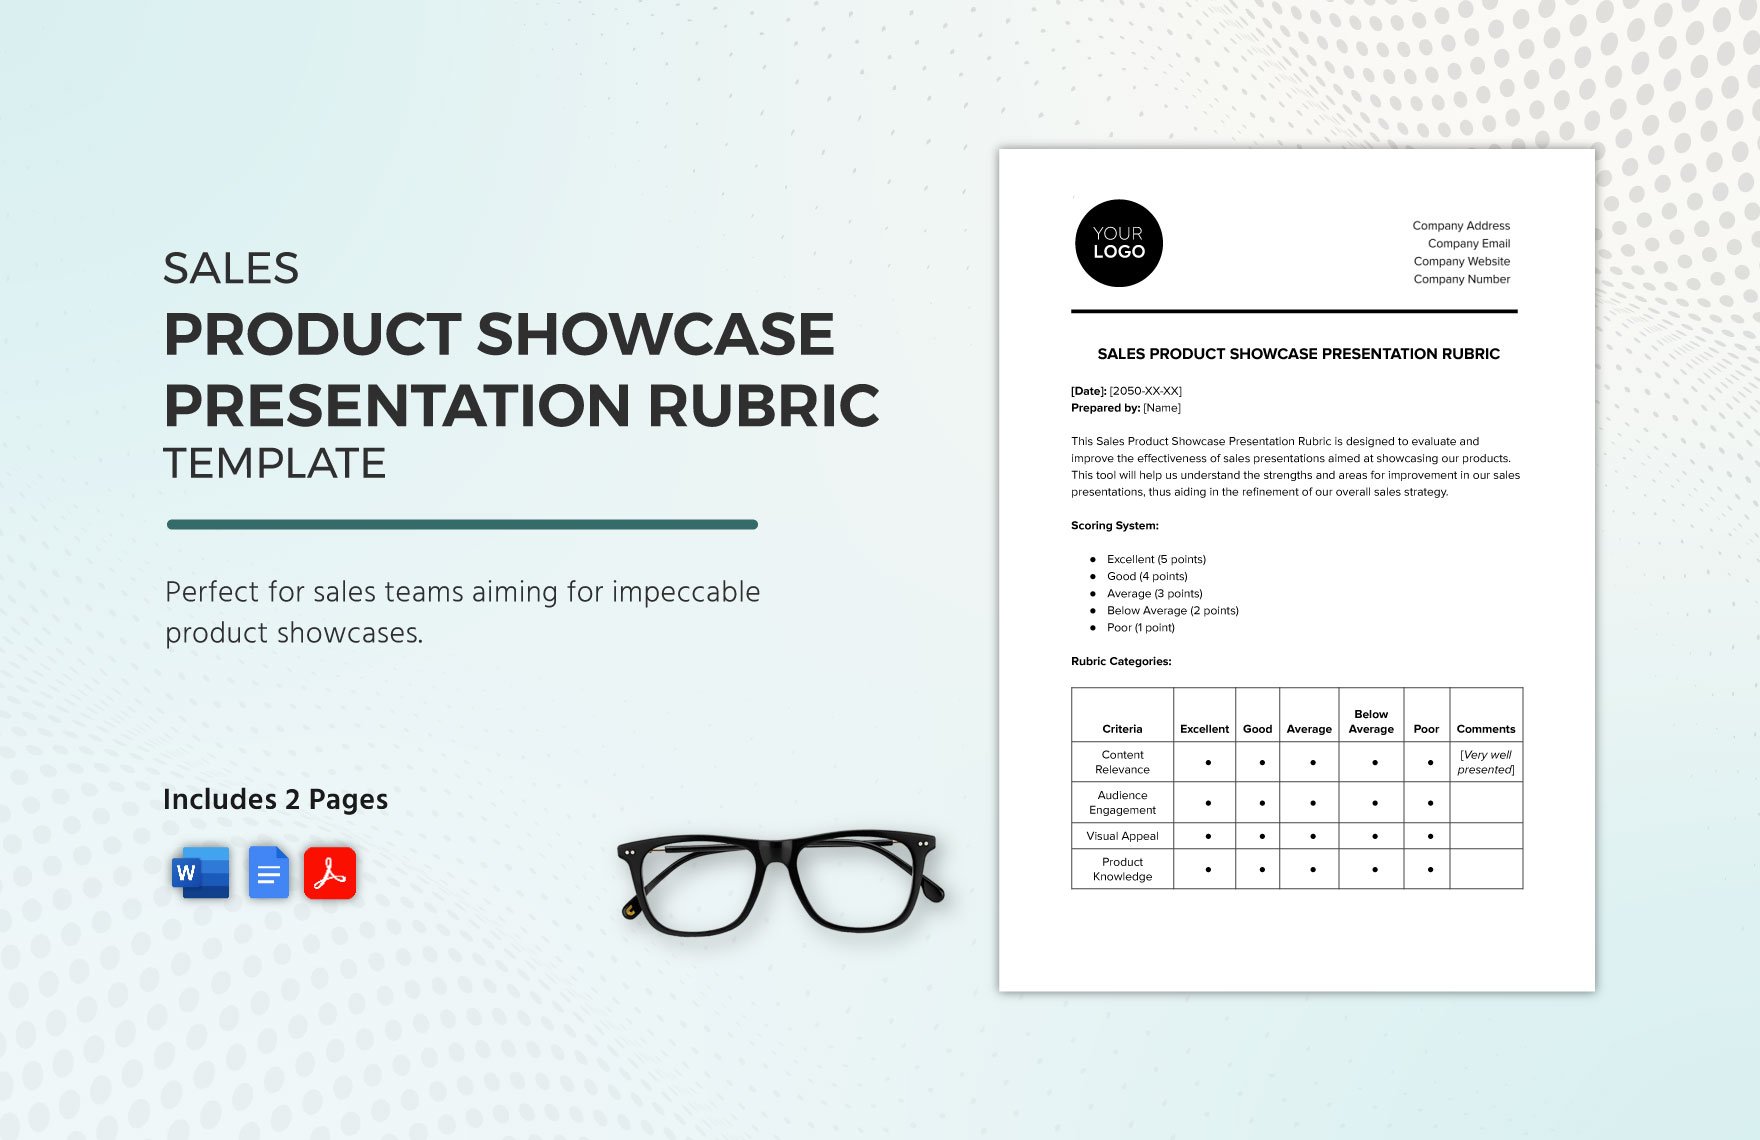 Sales Product Showcase Presentation Rubric Template in Word, Google Docs, PDF